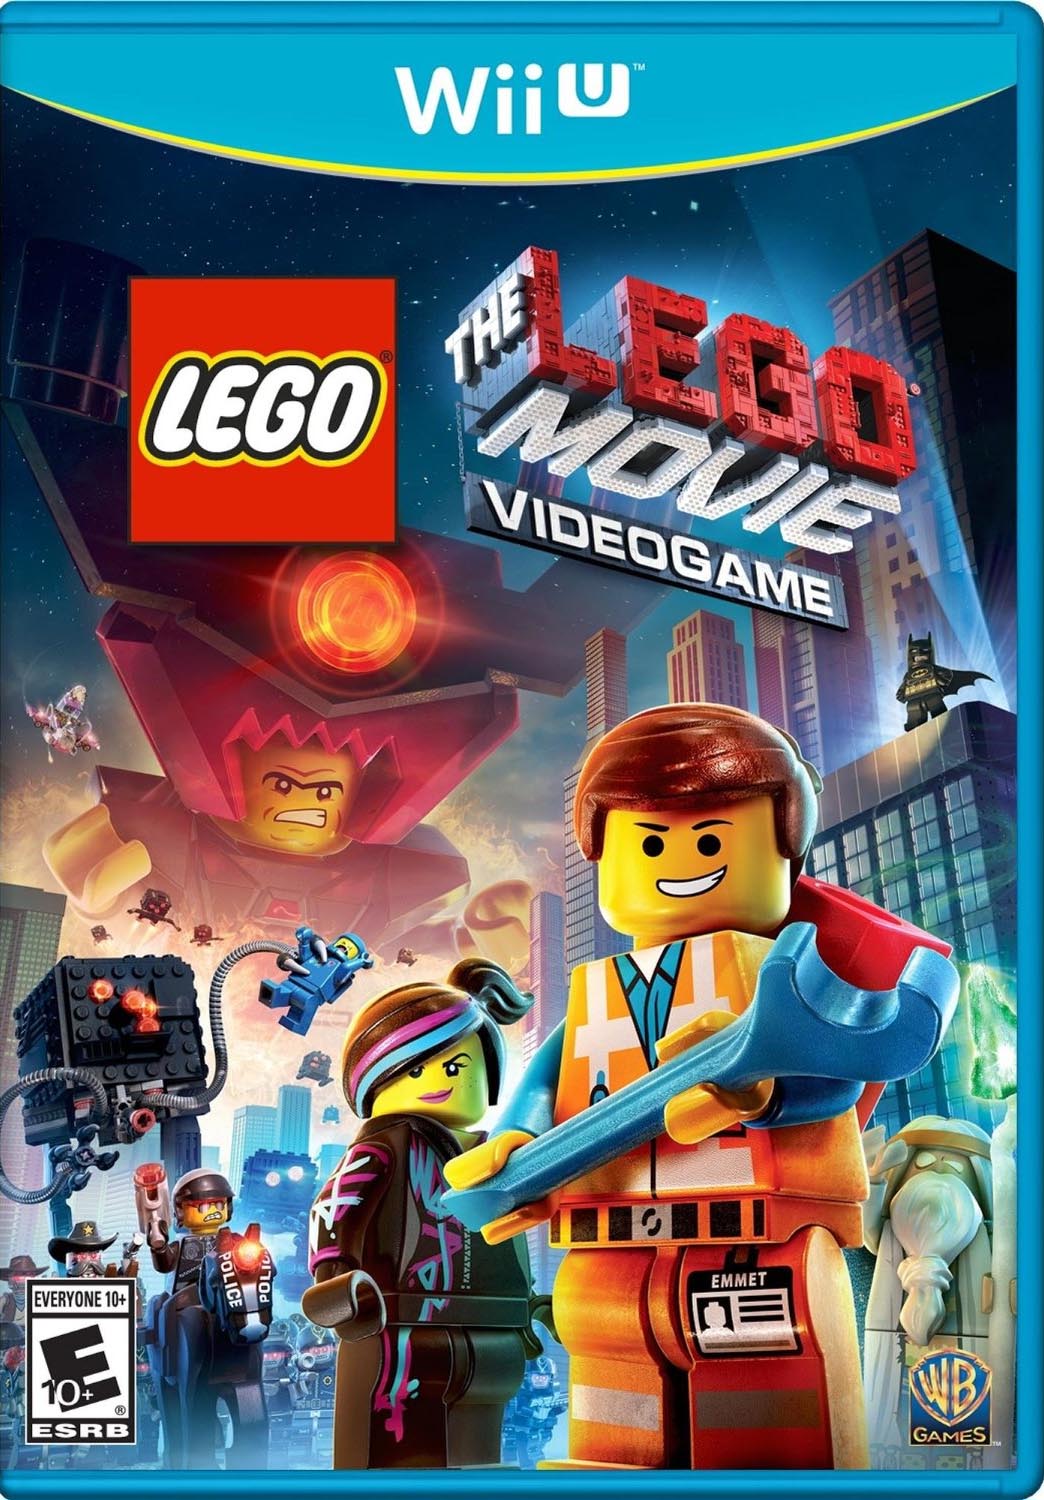 The LEGO Movie Videogame (Nintendo Wii U)